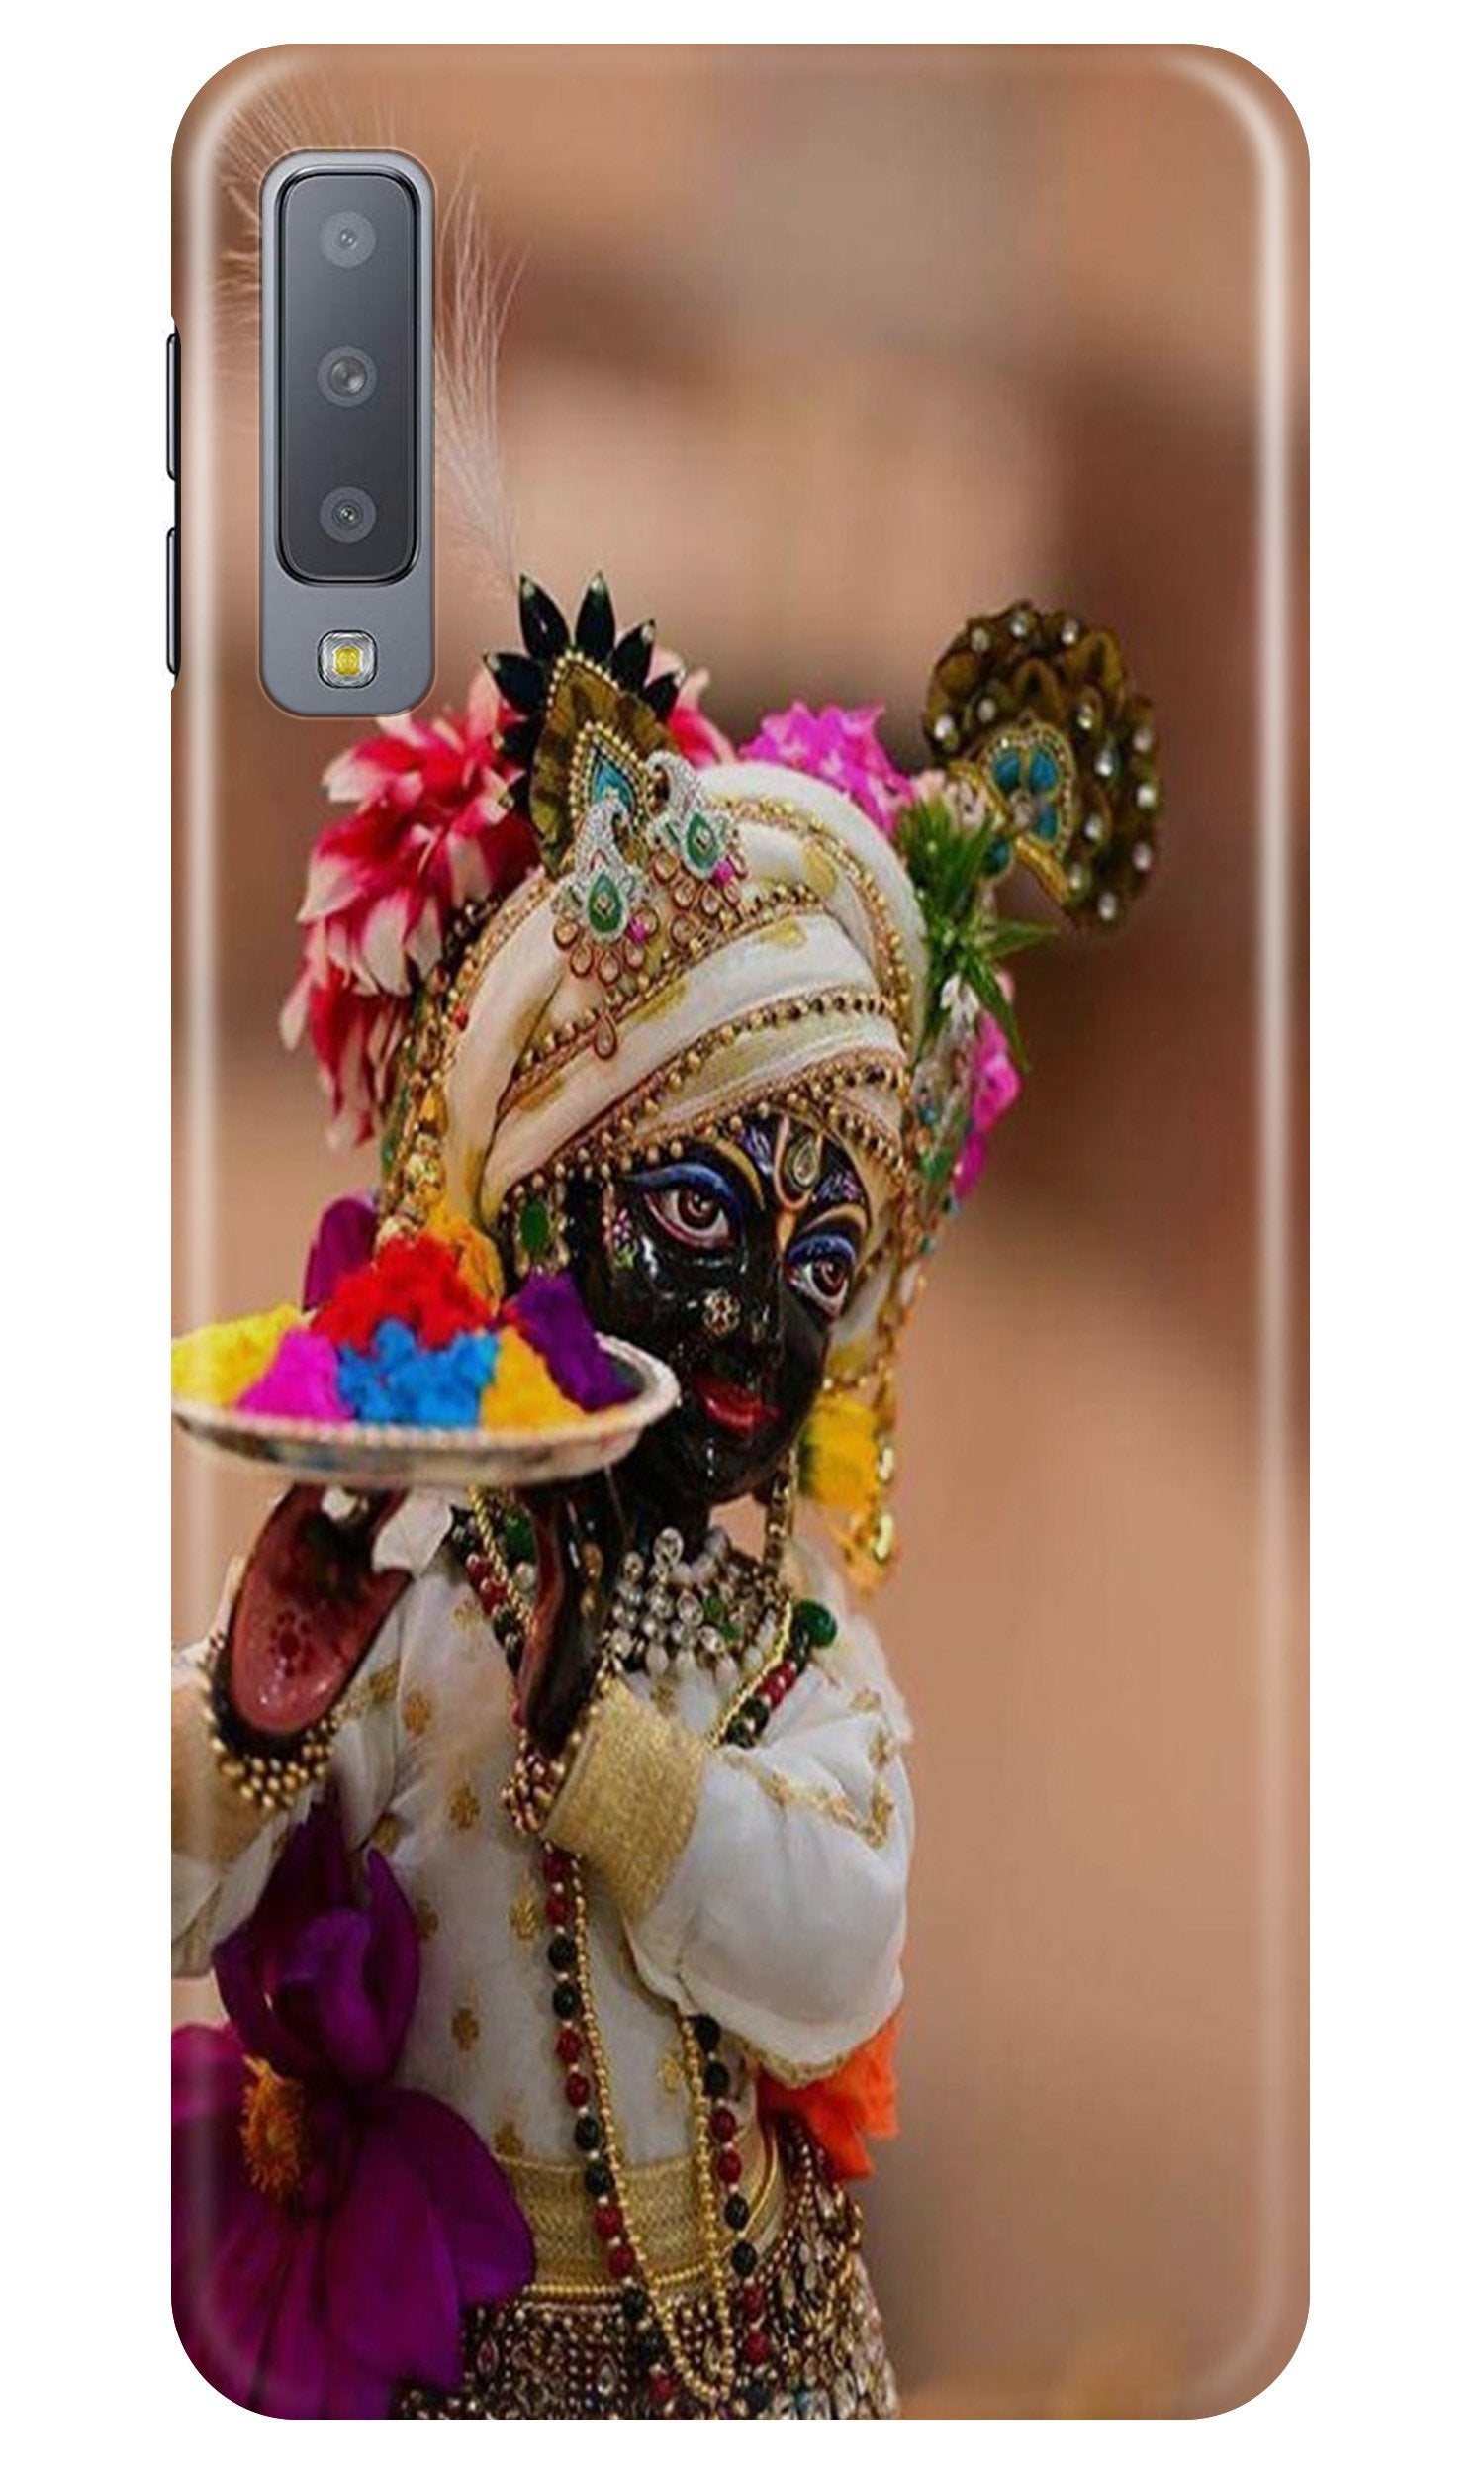 Lord Krishna2 Case for Galaxy A7 (2018)